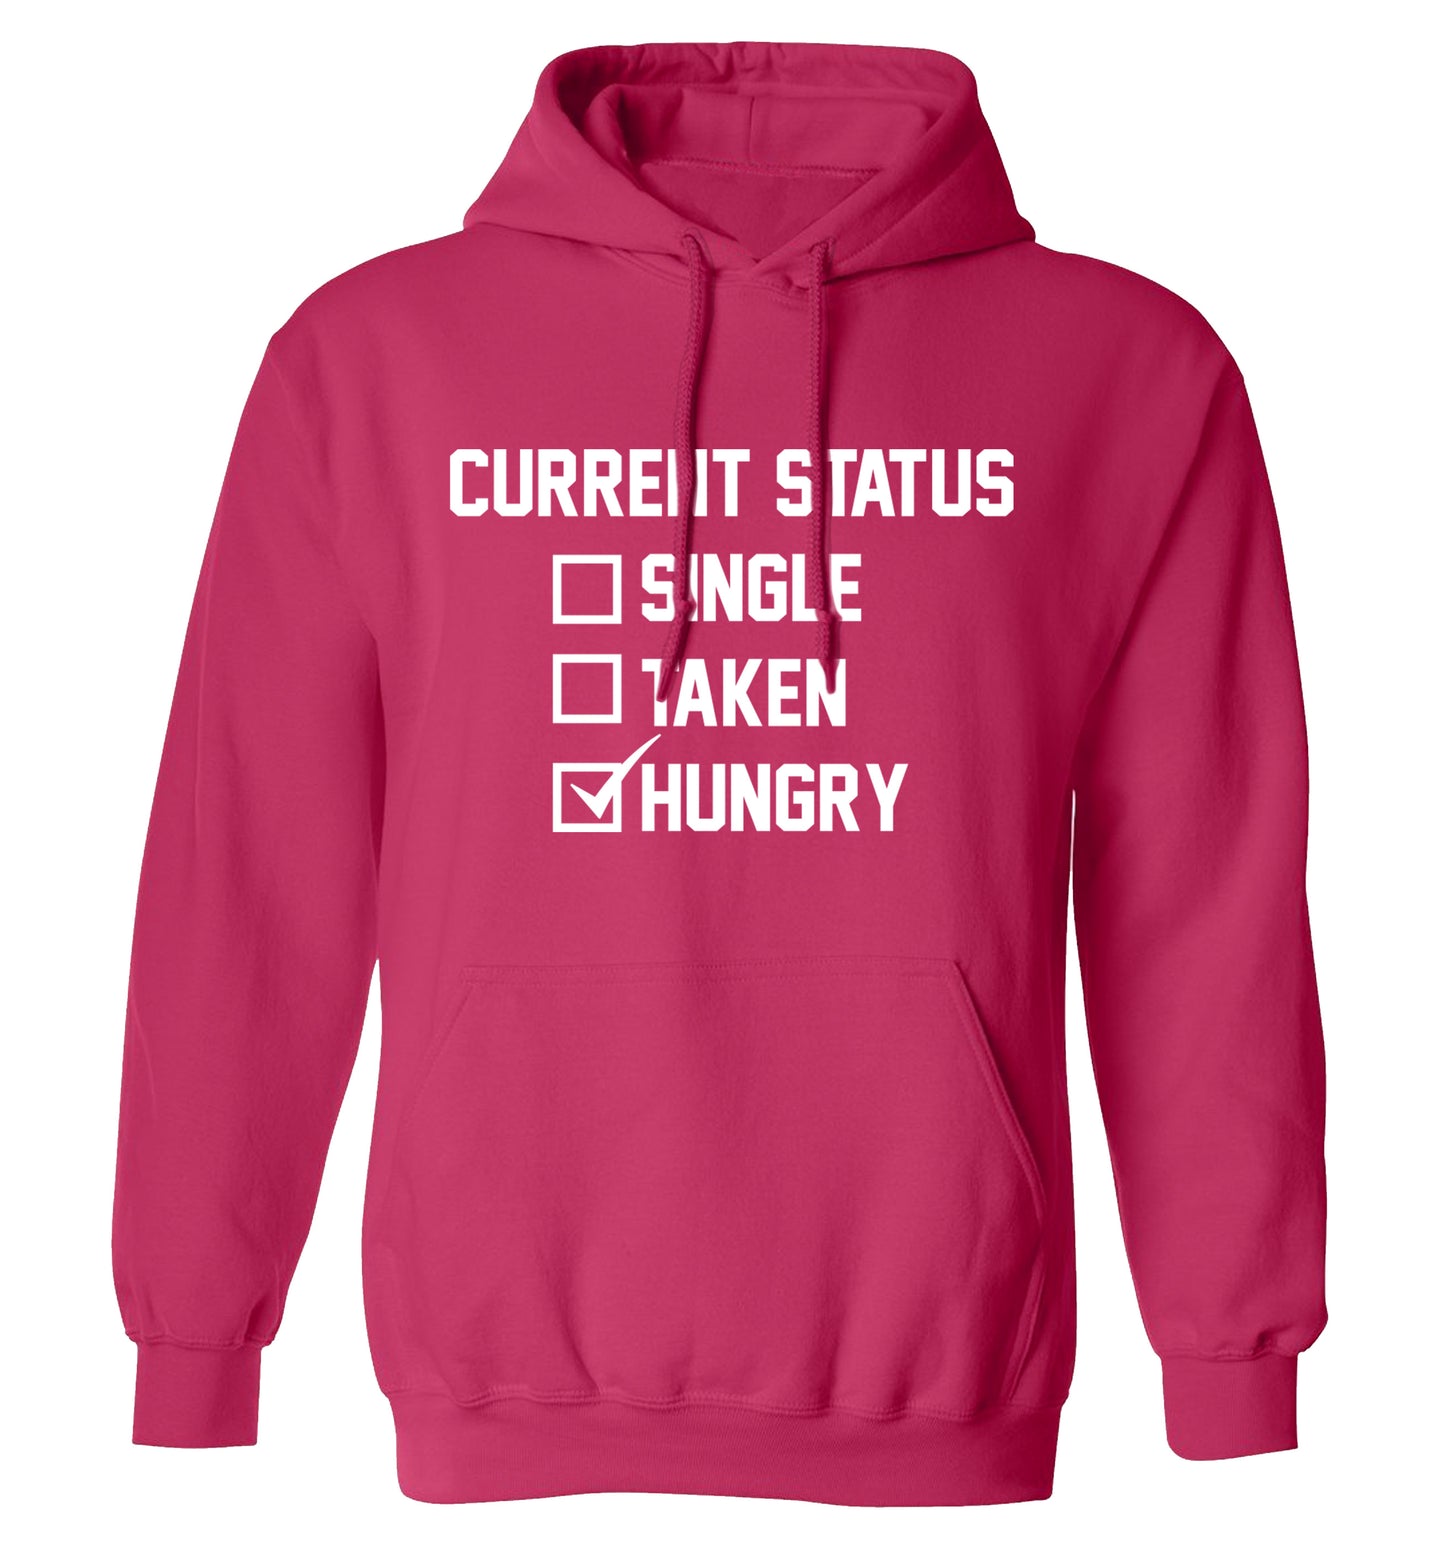 Relationship status single taken hungry adults unisex pink hoodie 2XL